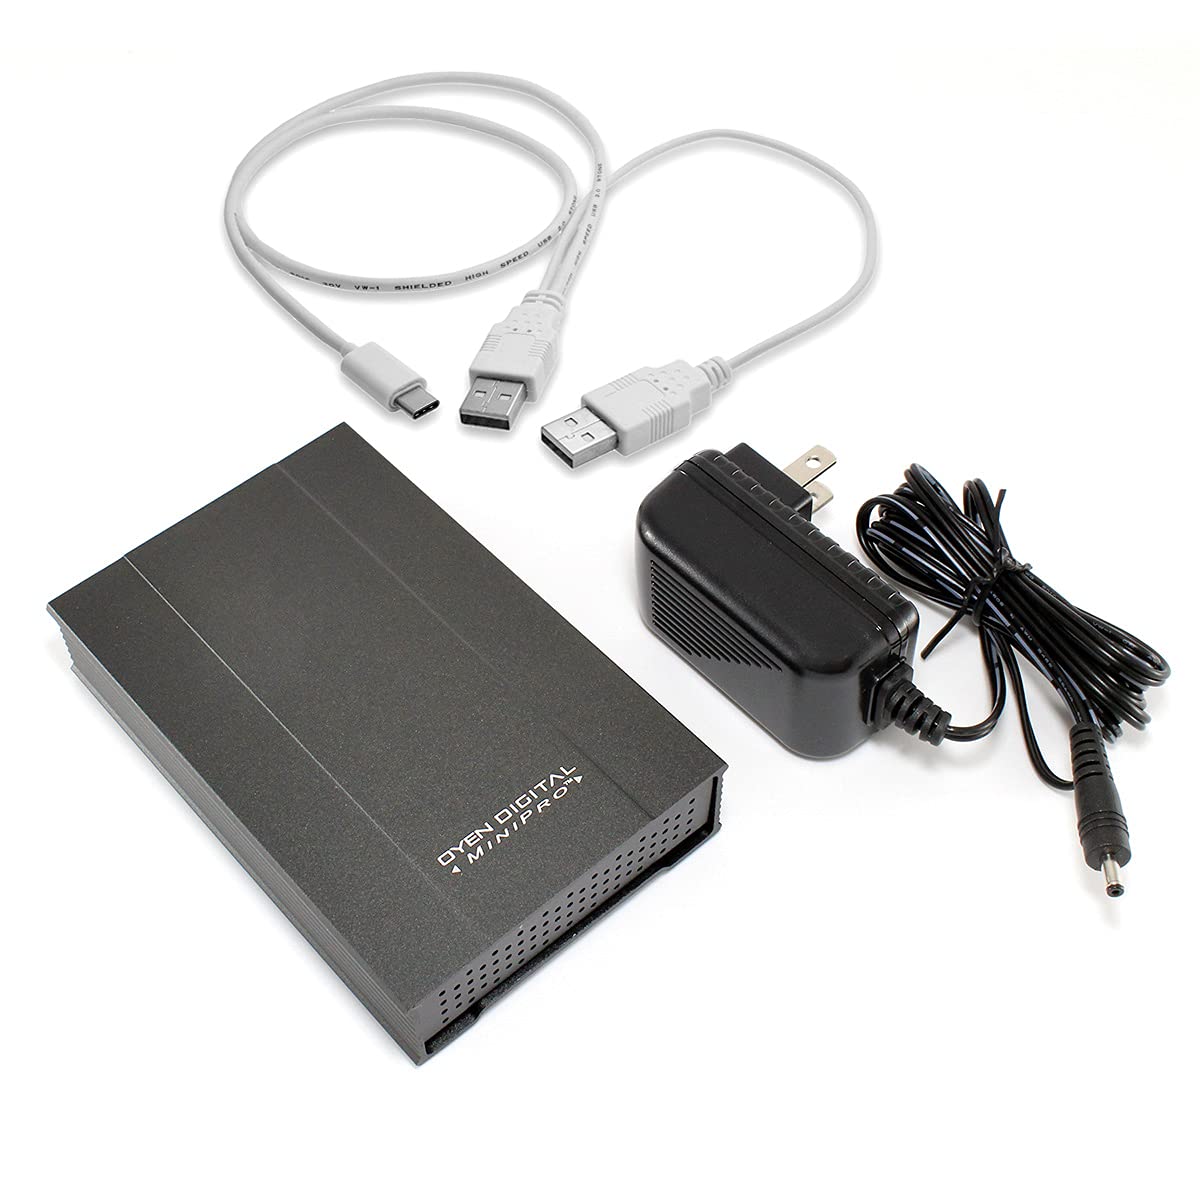 Oyen Digital MiniPro 1TB External USB 3.1 Portable Hard Drive for Nintendo Wii U